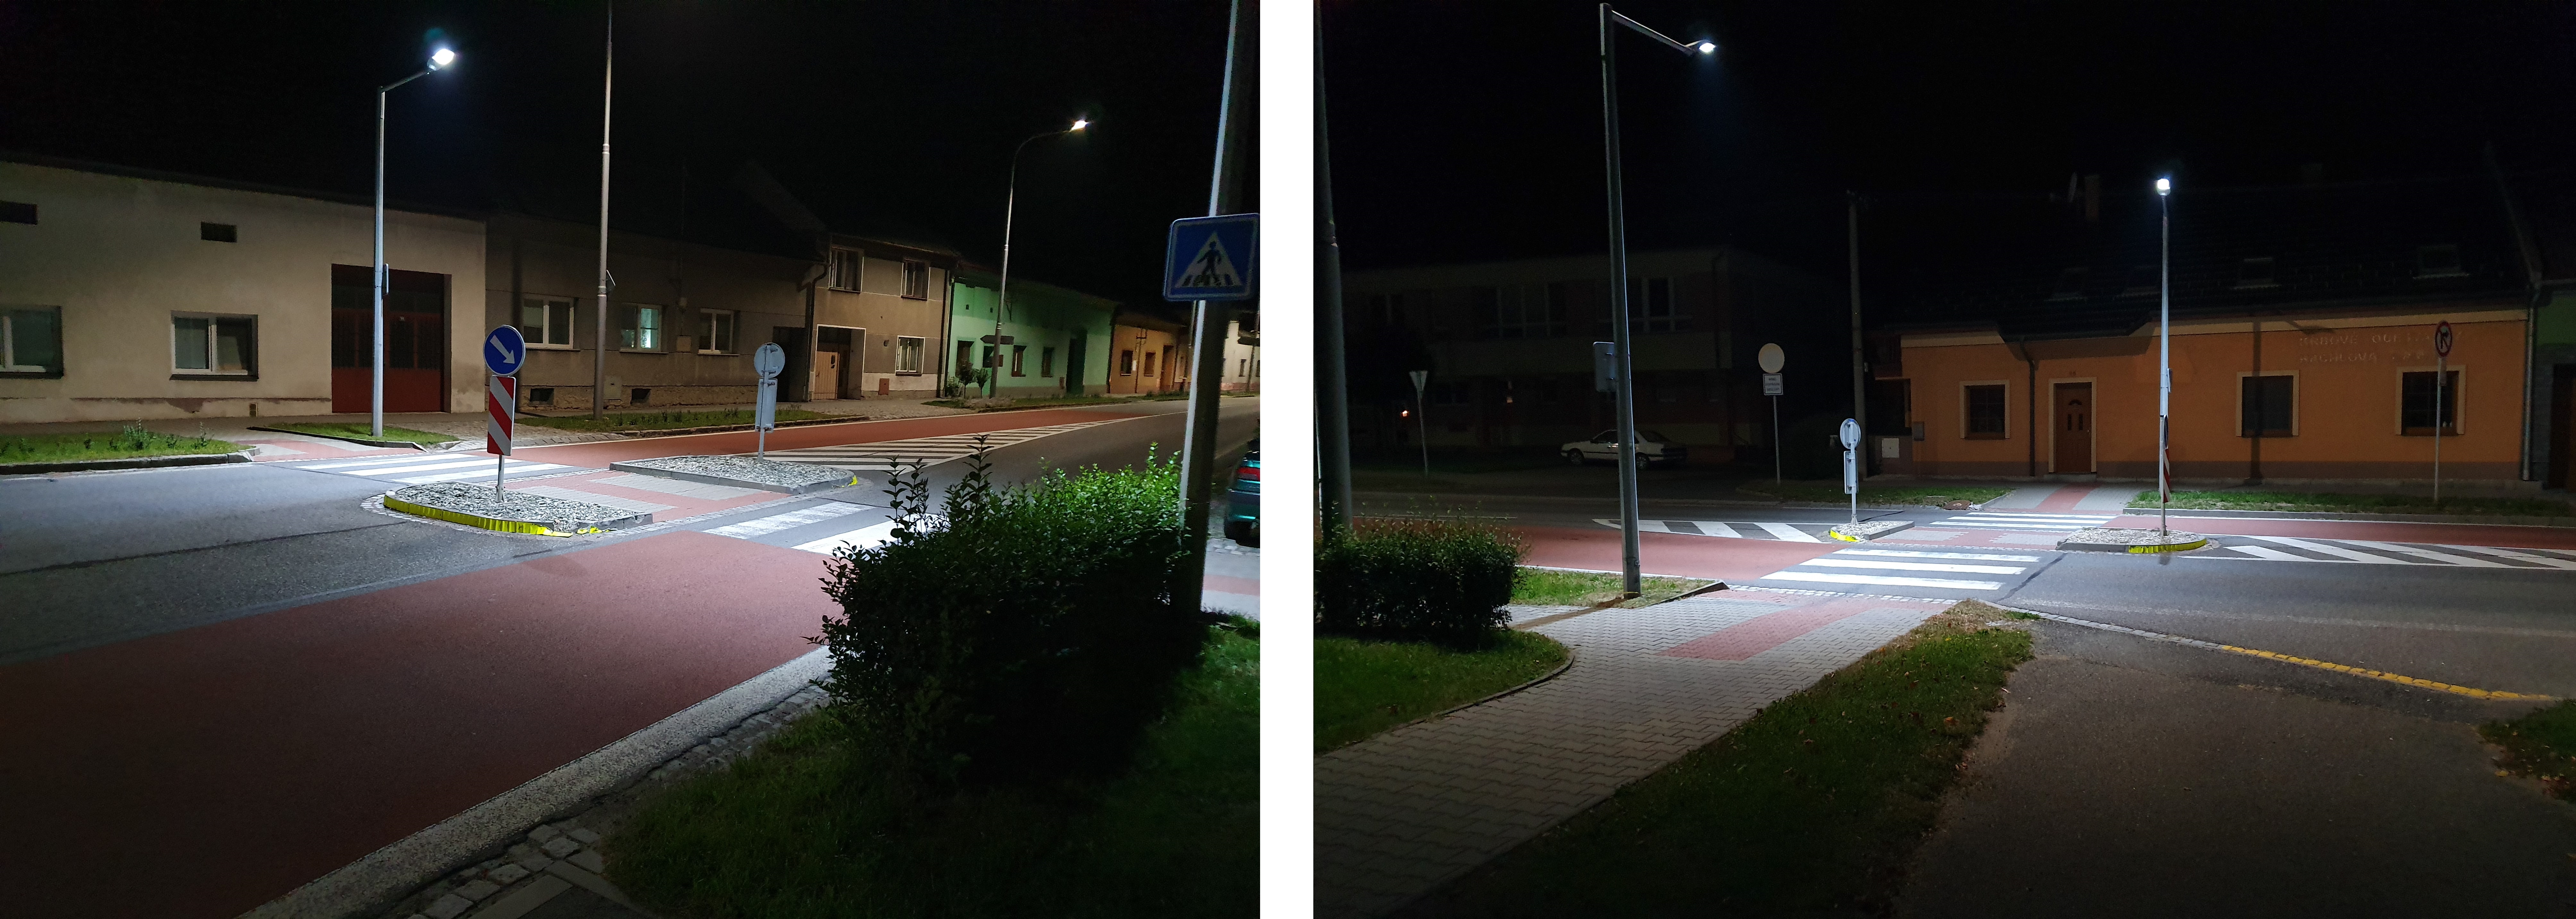 lighting for pedestrian crossings